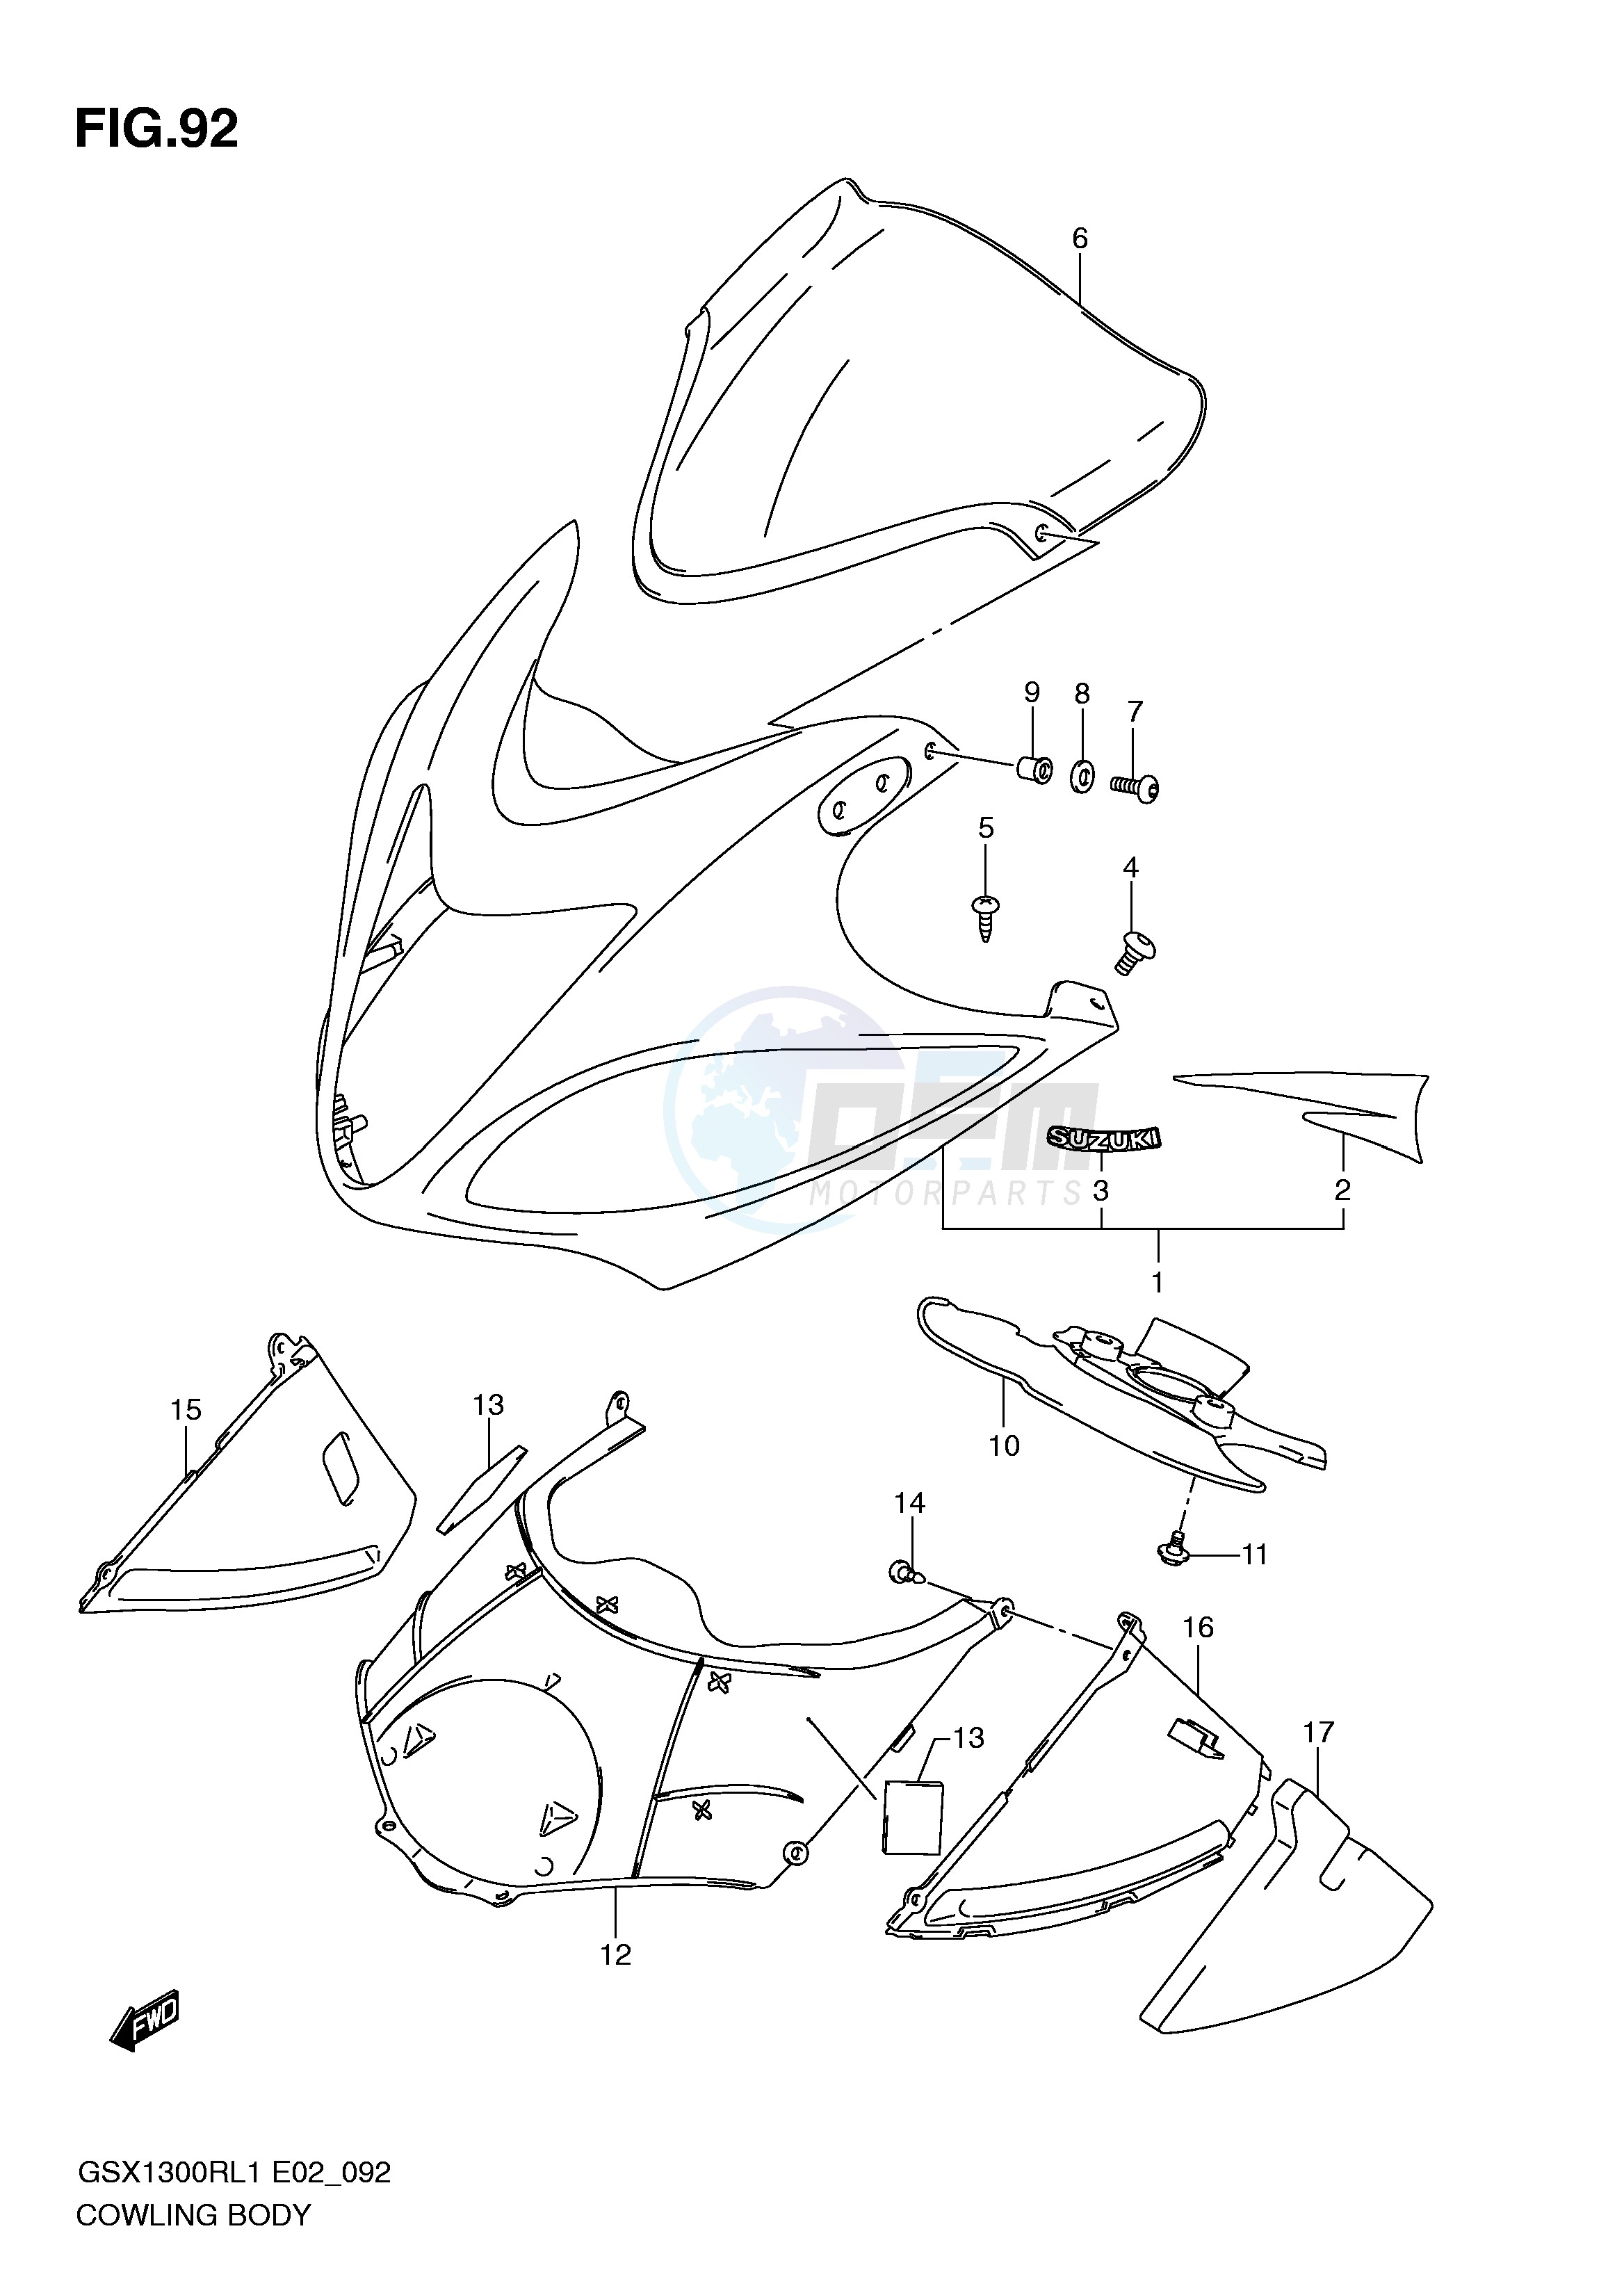 COWLING BODY (GSX1300RL1 E19) blueprint